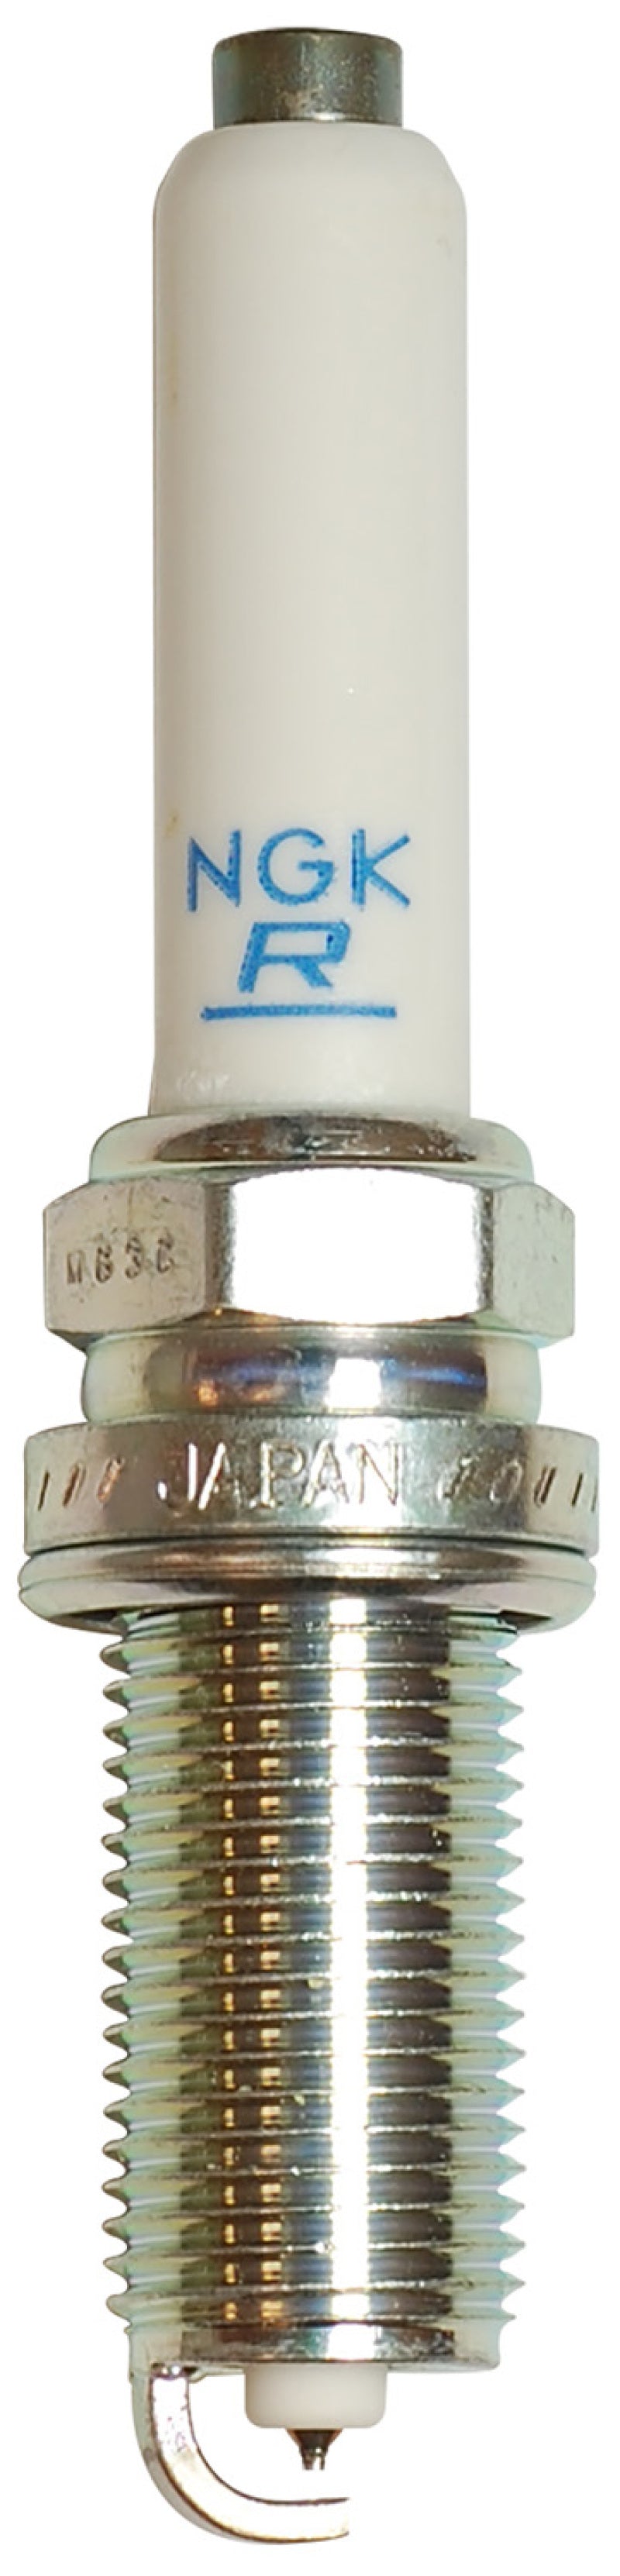 NGK Laser Platinum Spark Plug Box of 4 (PLFER7A8EG).